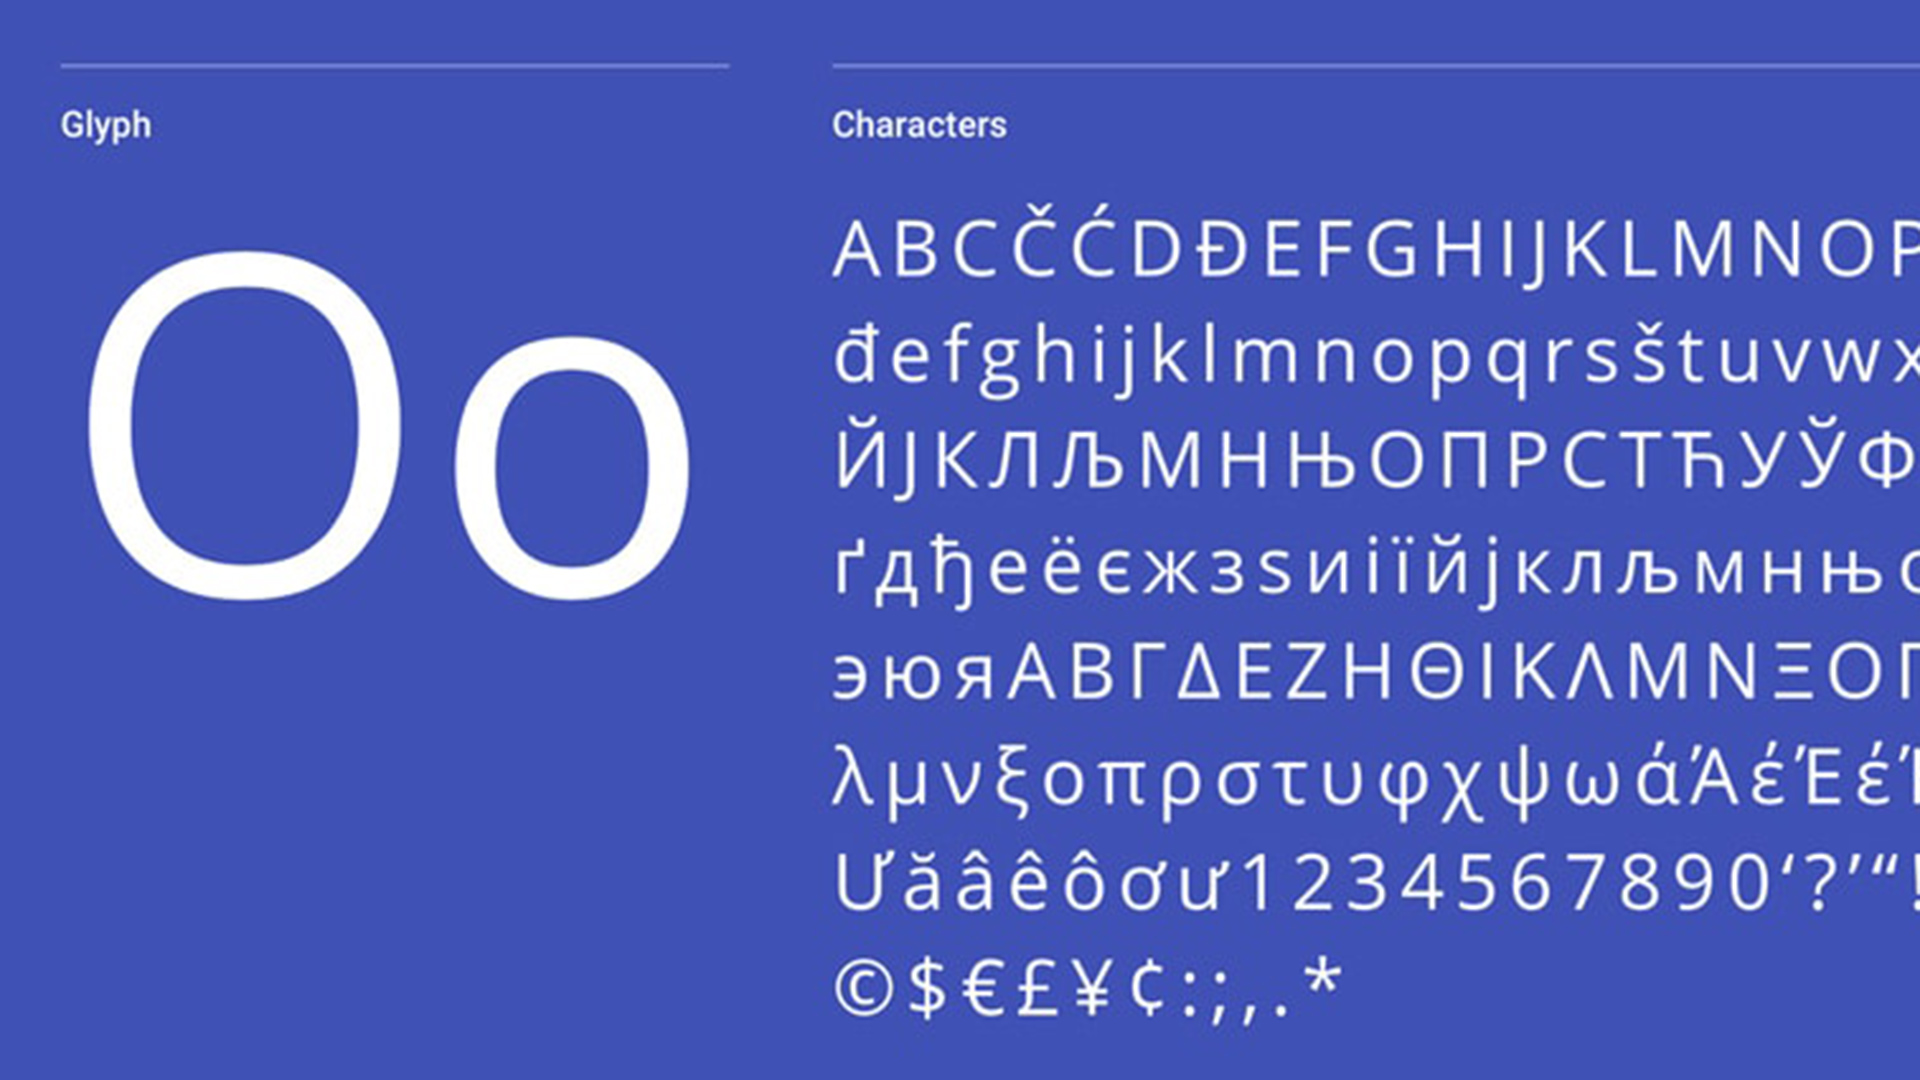 popular san serif typefaces